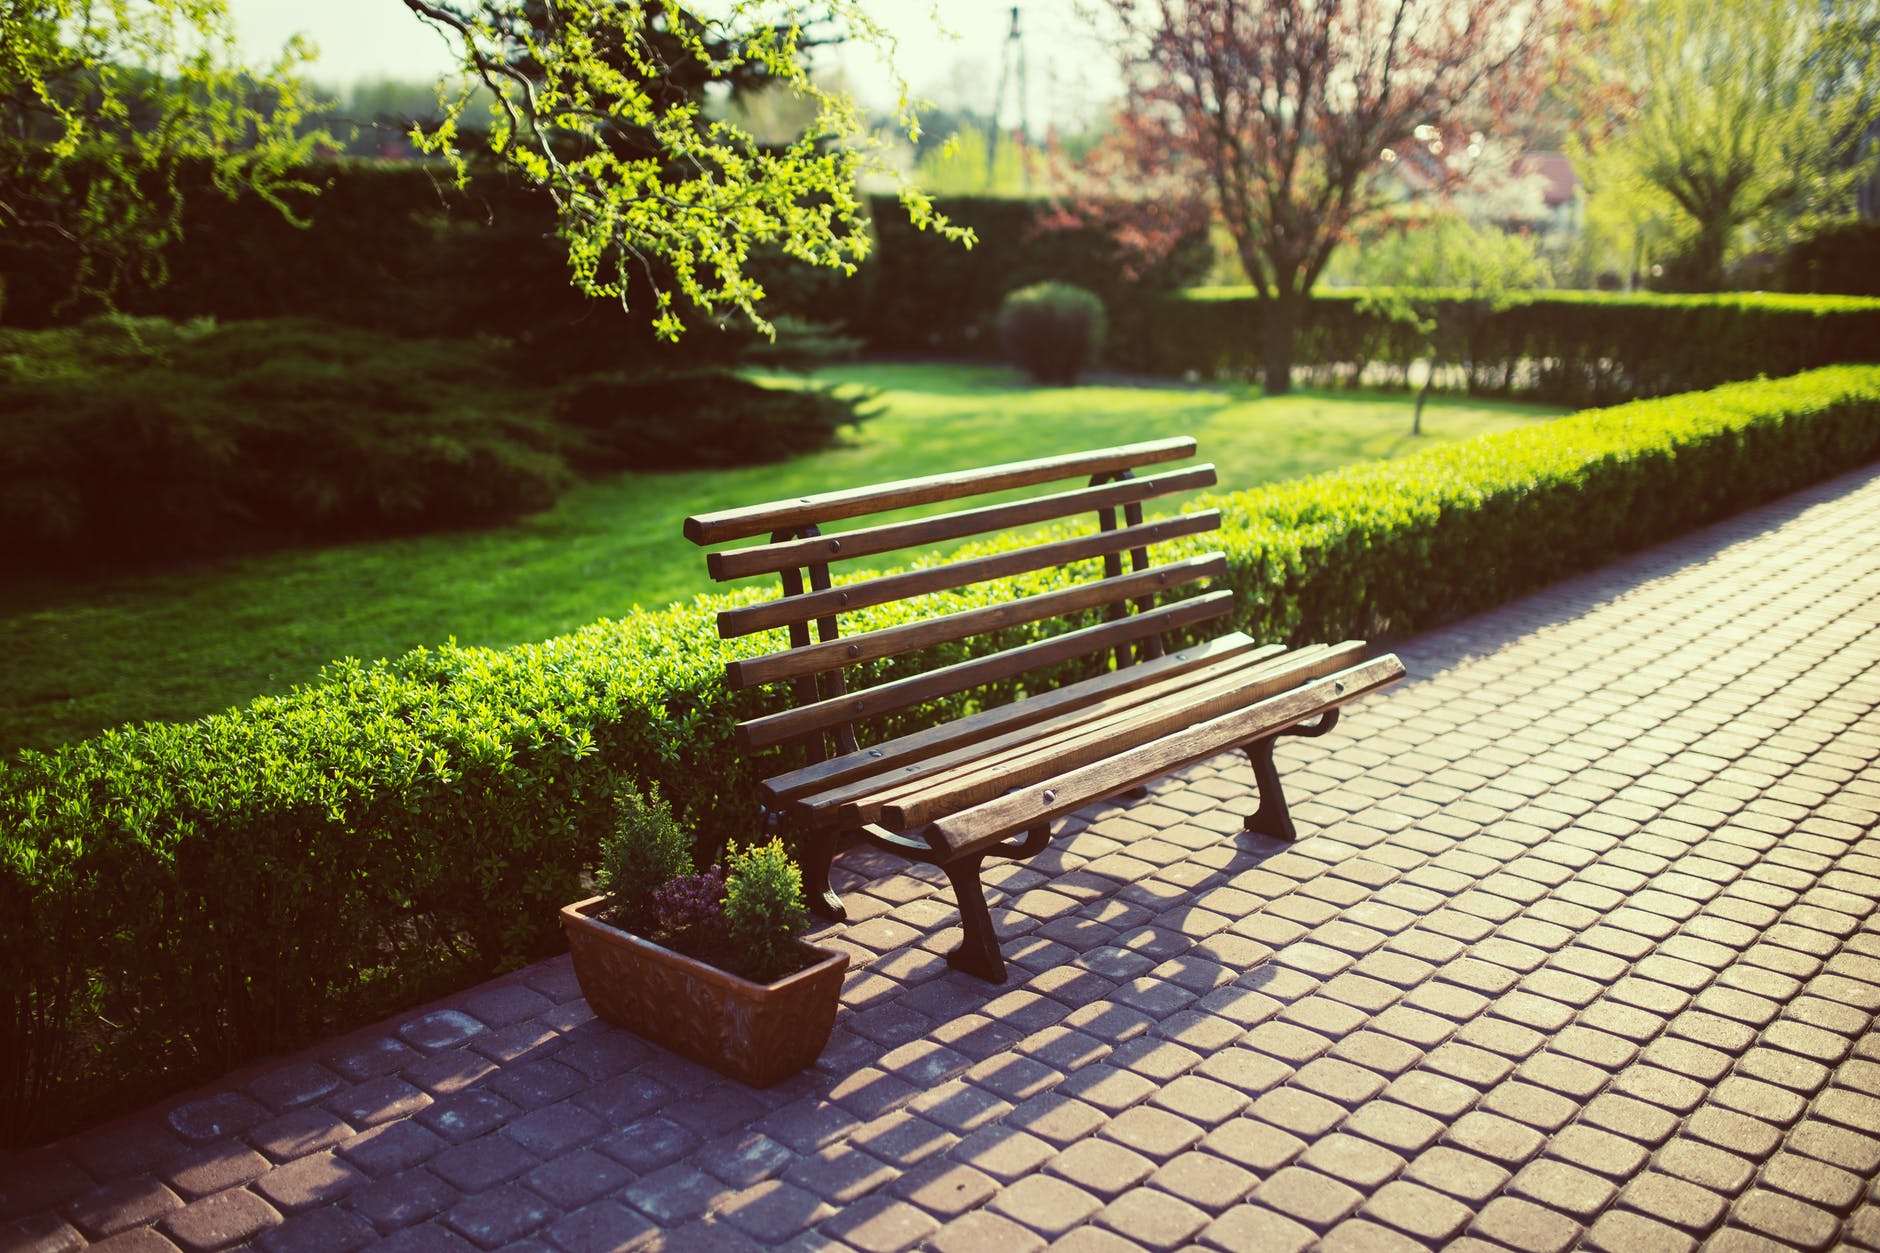 empty bench in the garden